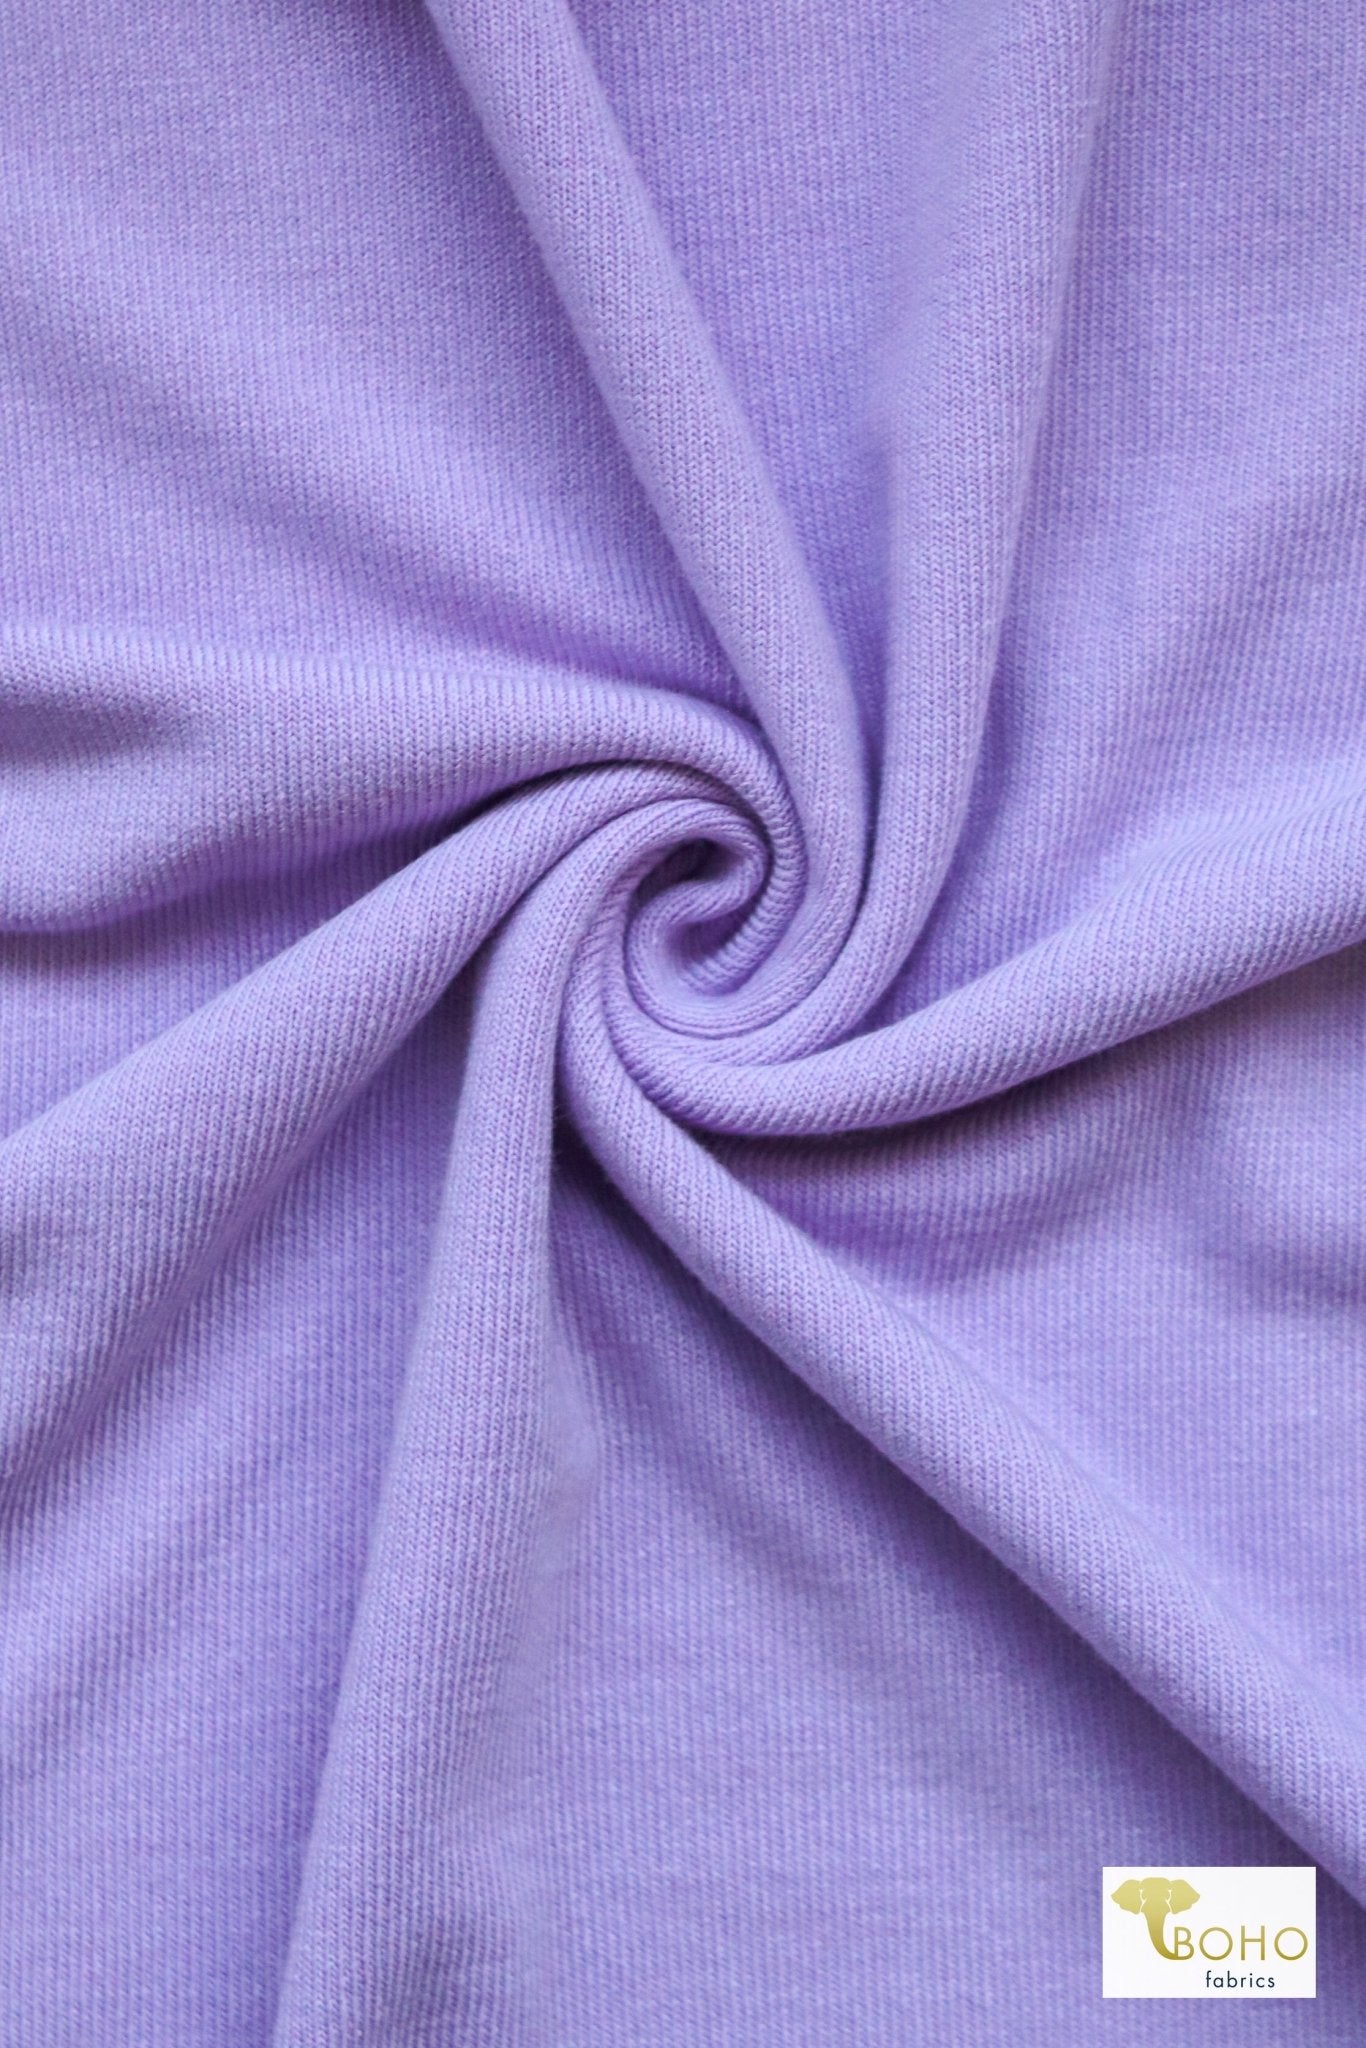 Lavender Purple, Sweater Knit - Boho Fabrics